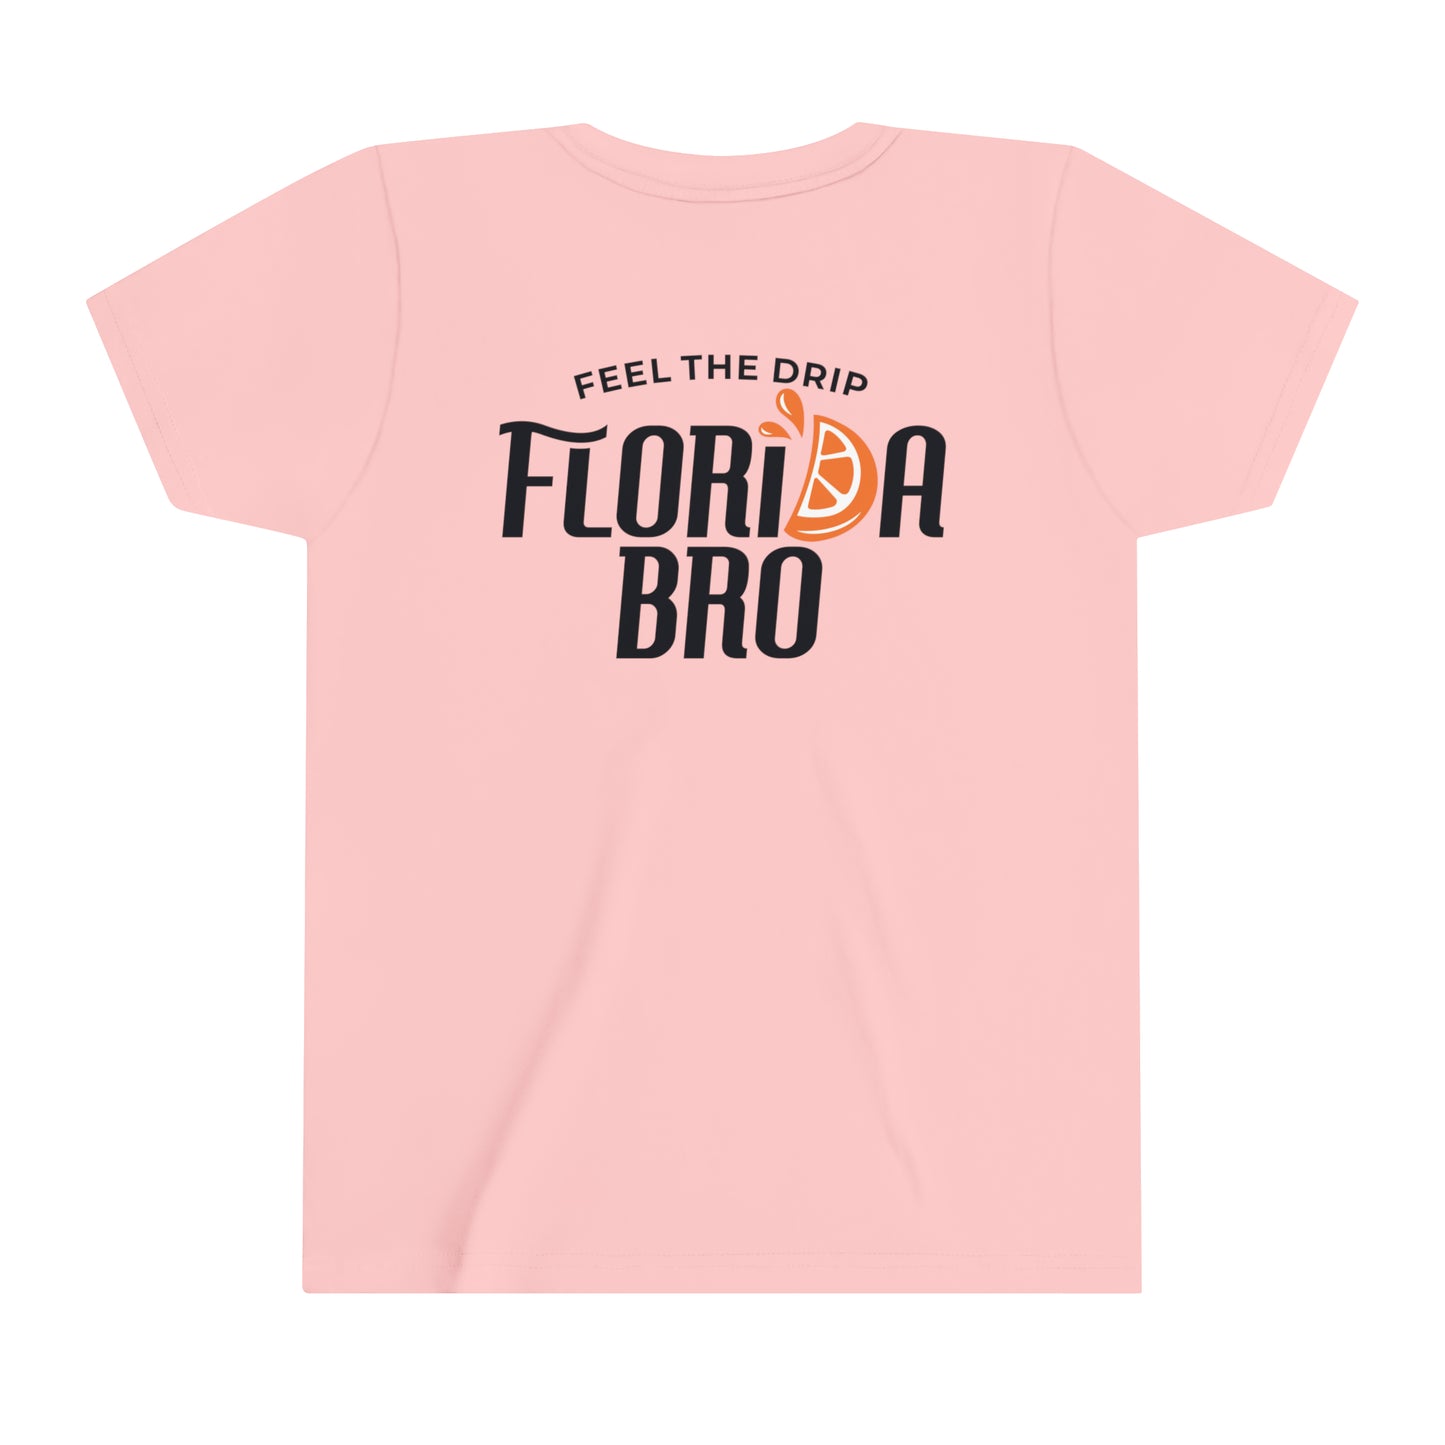 FLORIDA BRO - Short Sleeve Florida Beach Tee - Youth Sizes